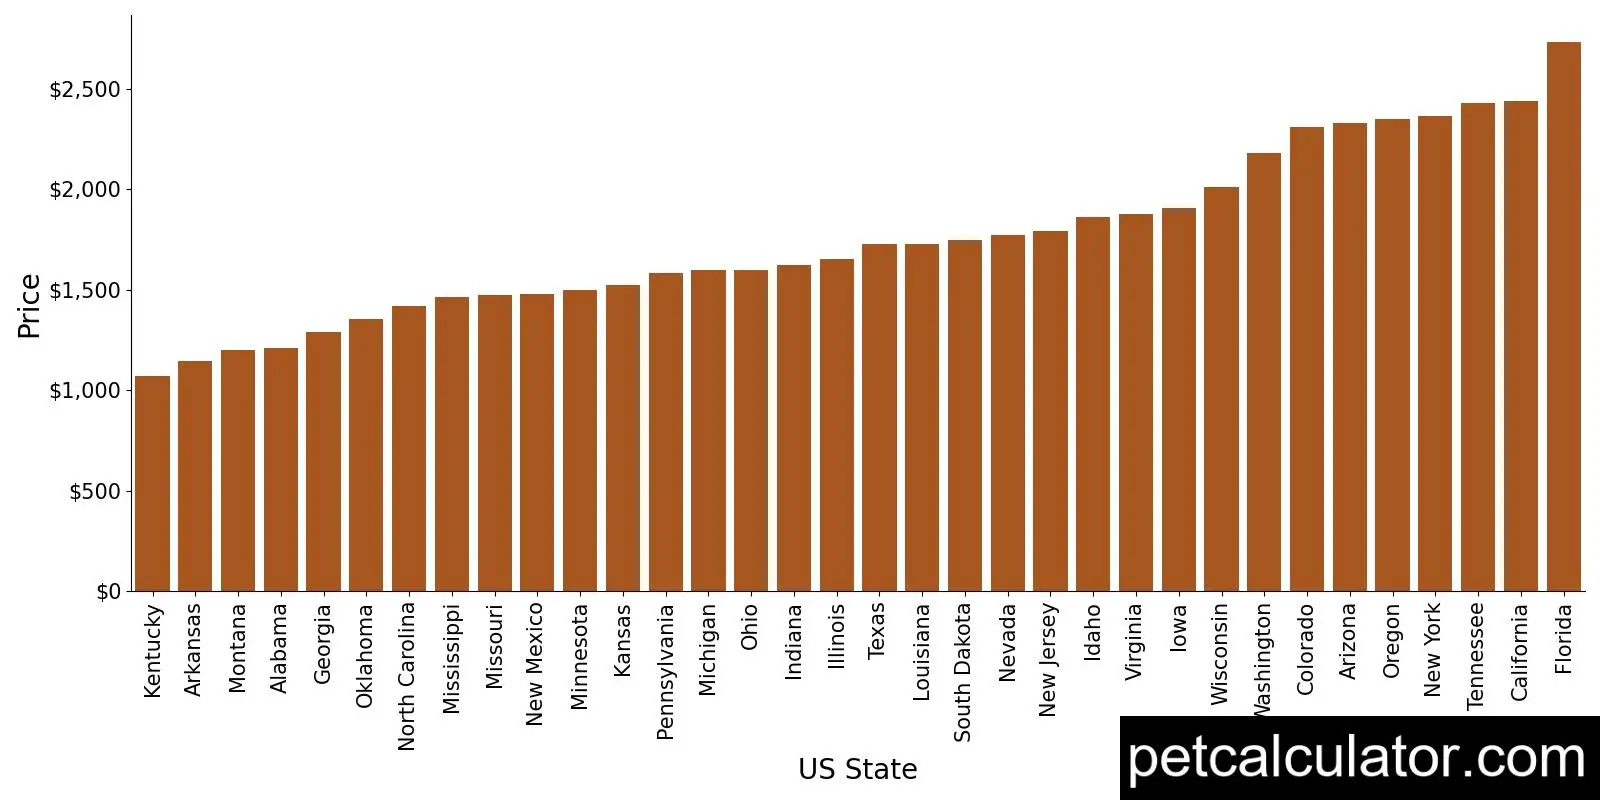 Price of Pembroke Welsh Corgi by US State 